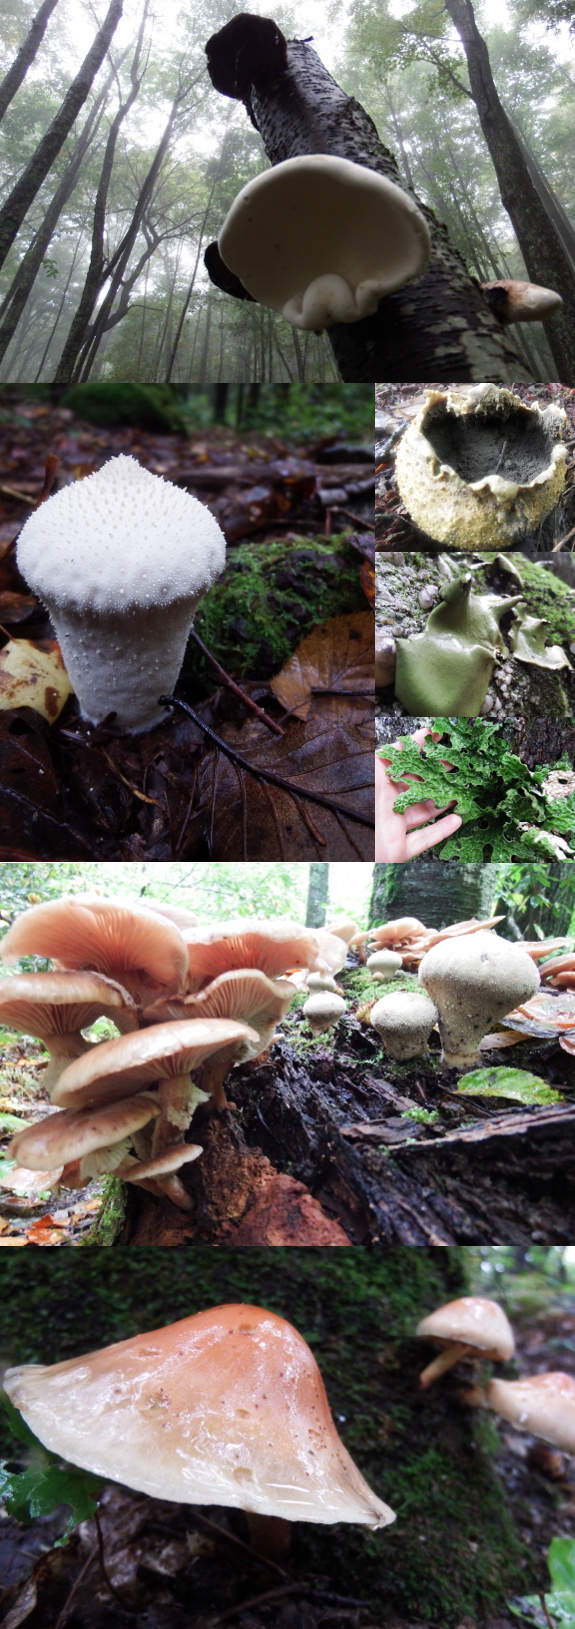 High elevation fungi